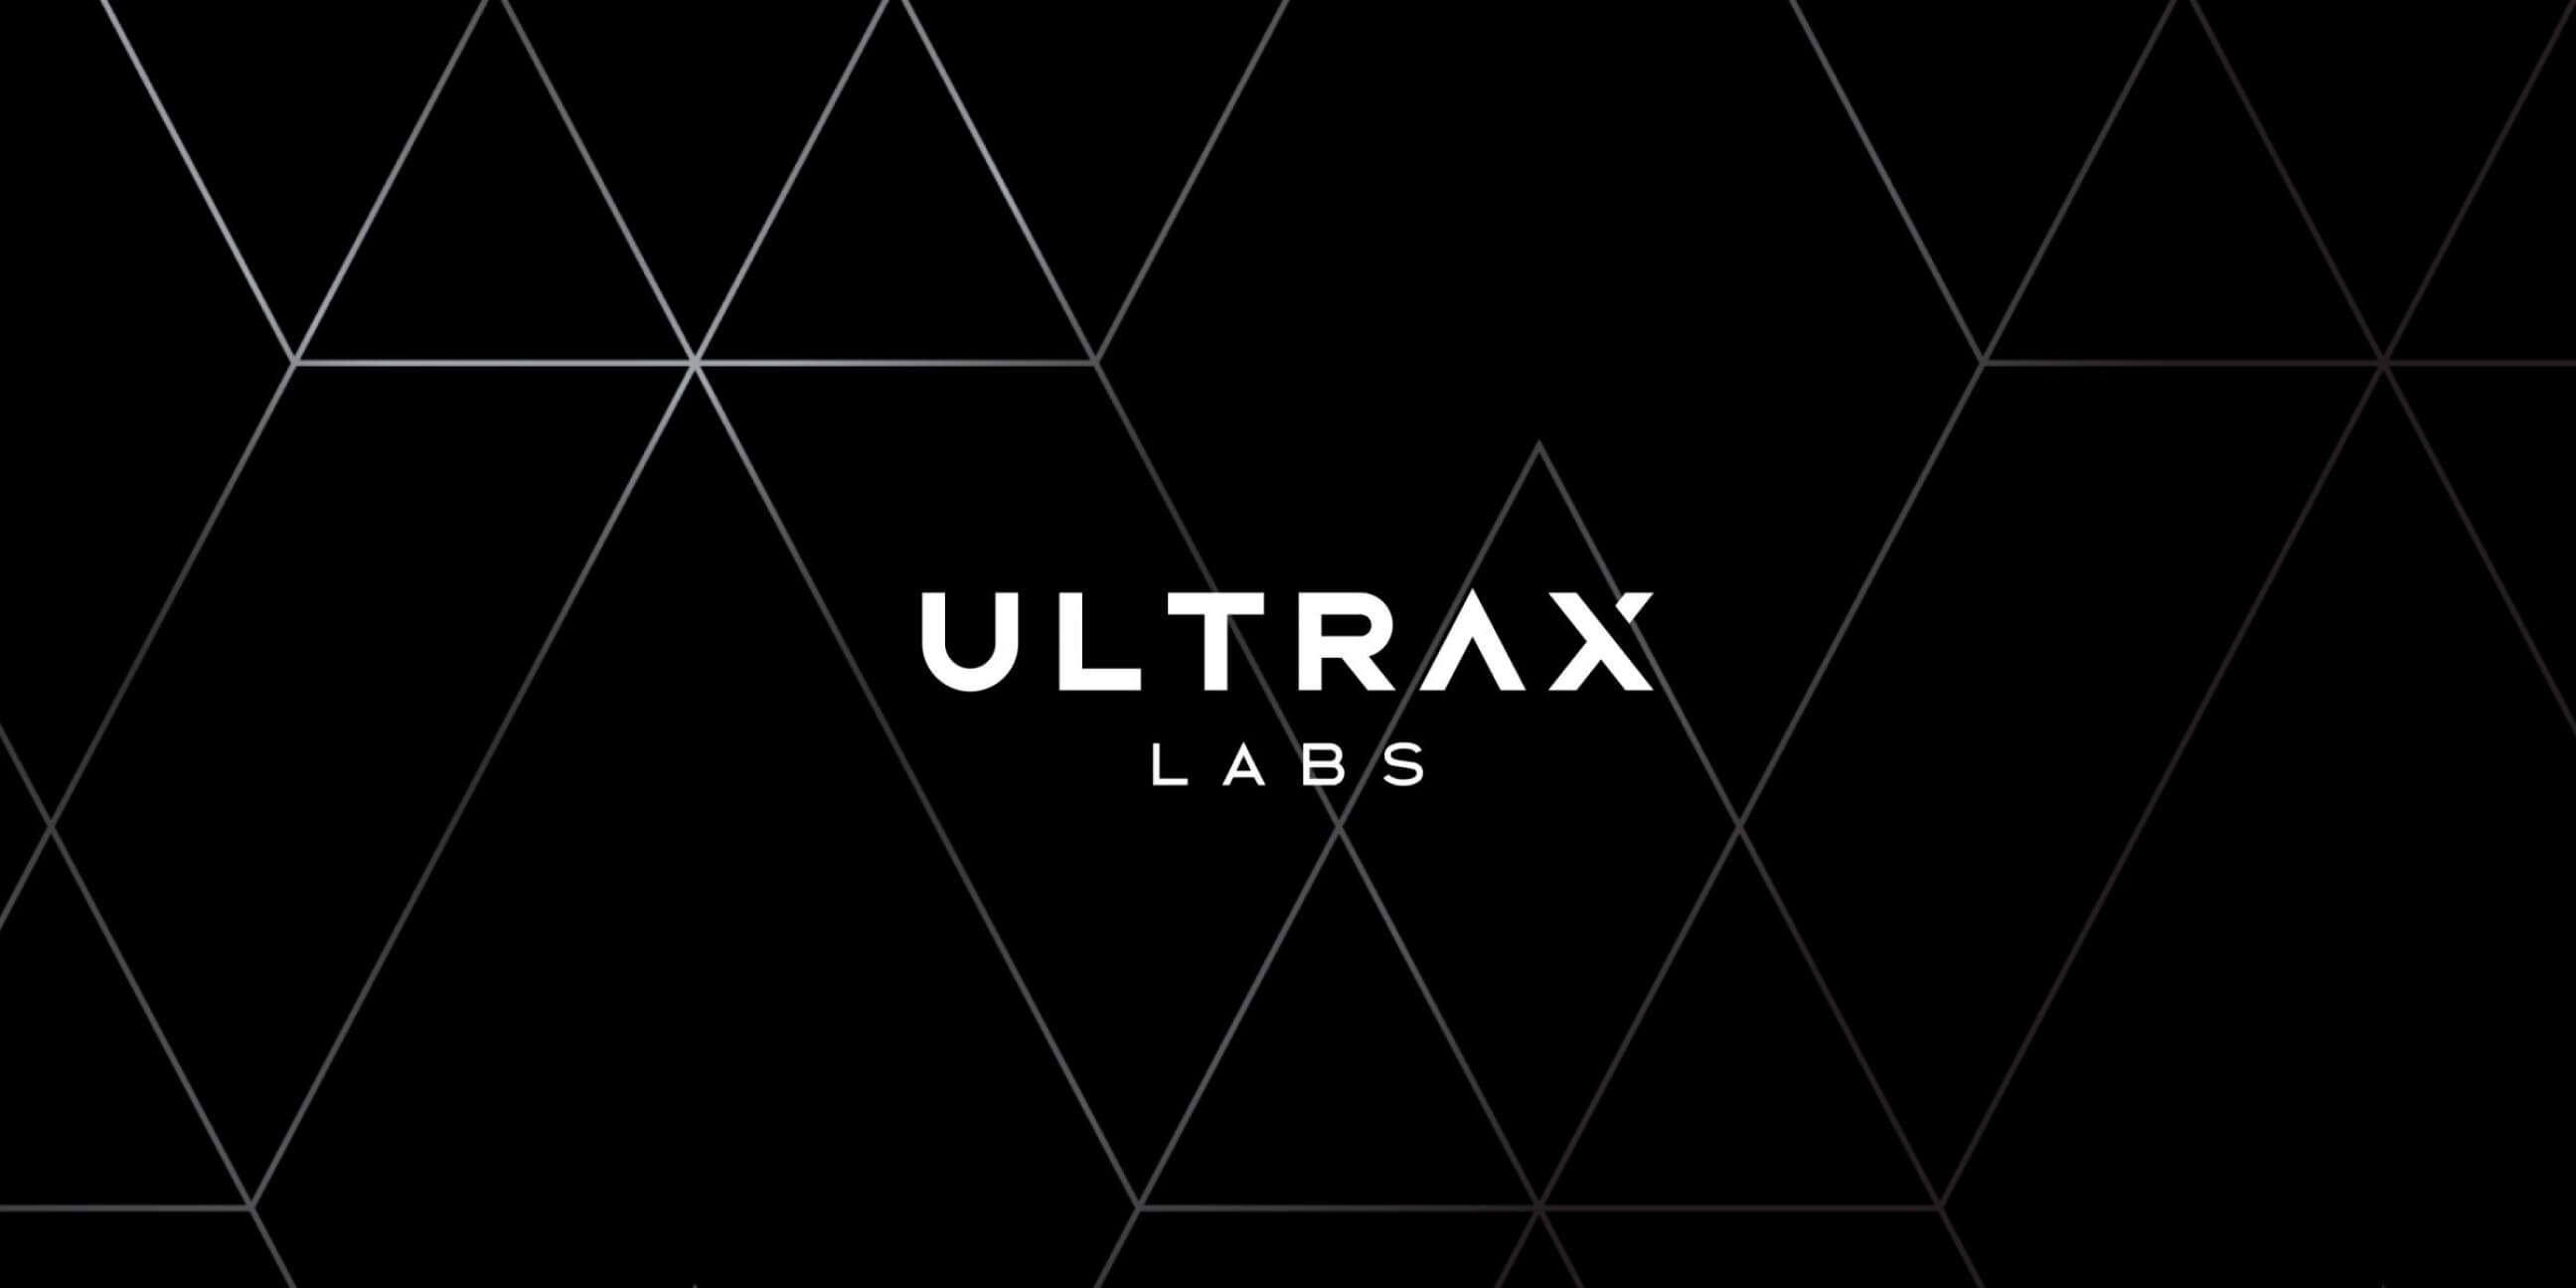 Ultrax Labs Image